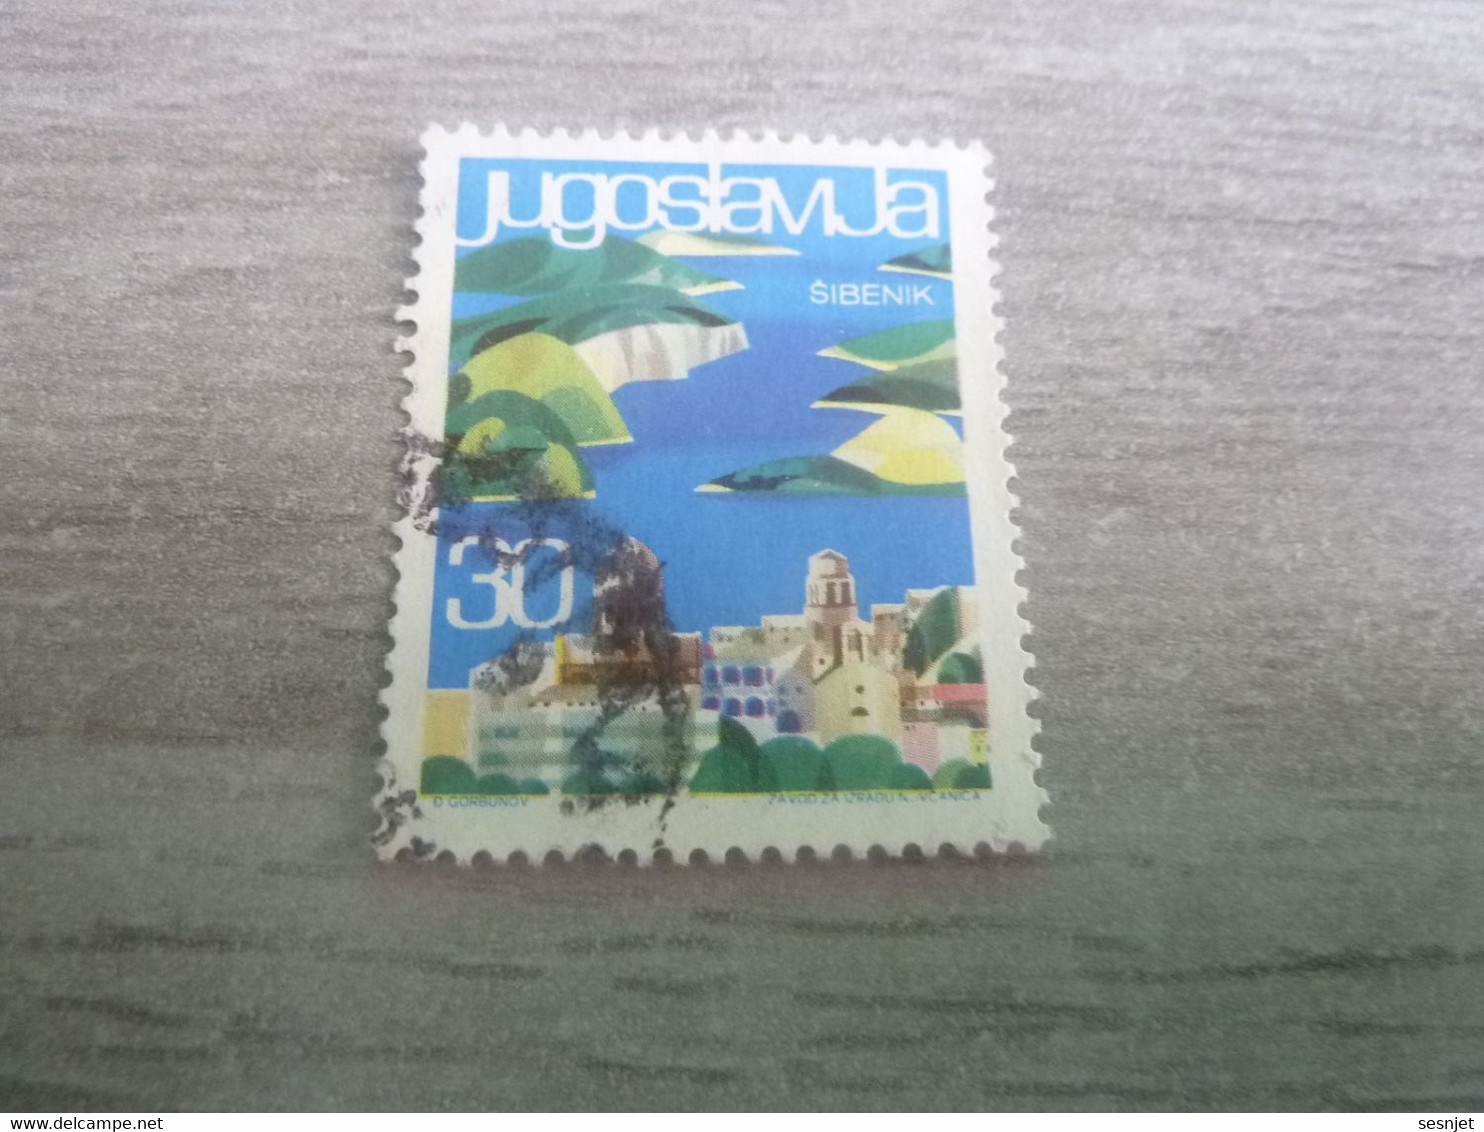 Jugoslavija - Sibenik - Val 30 - Multicolore - Oblitéré - - Used Stamps